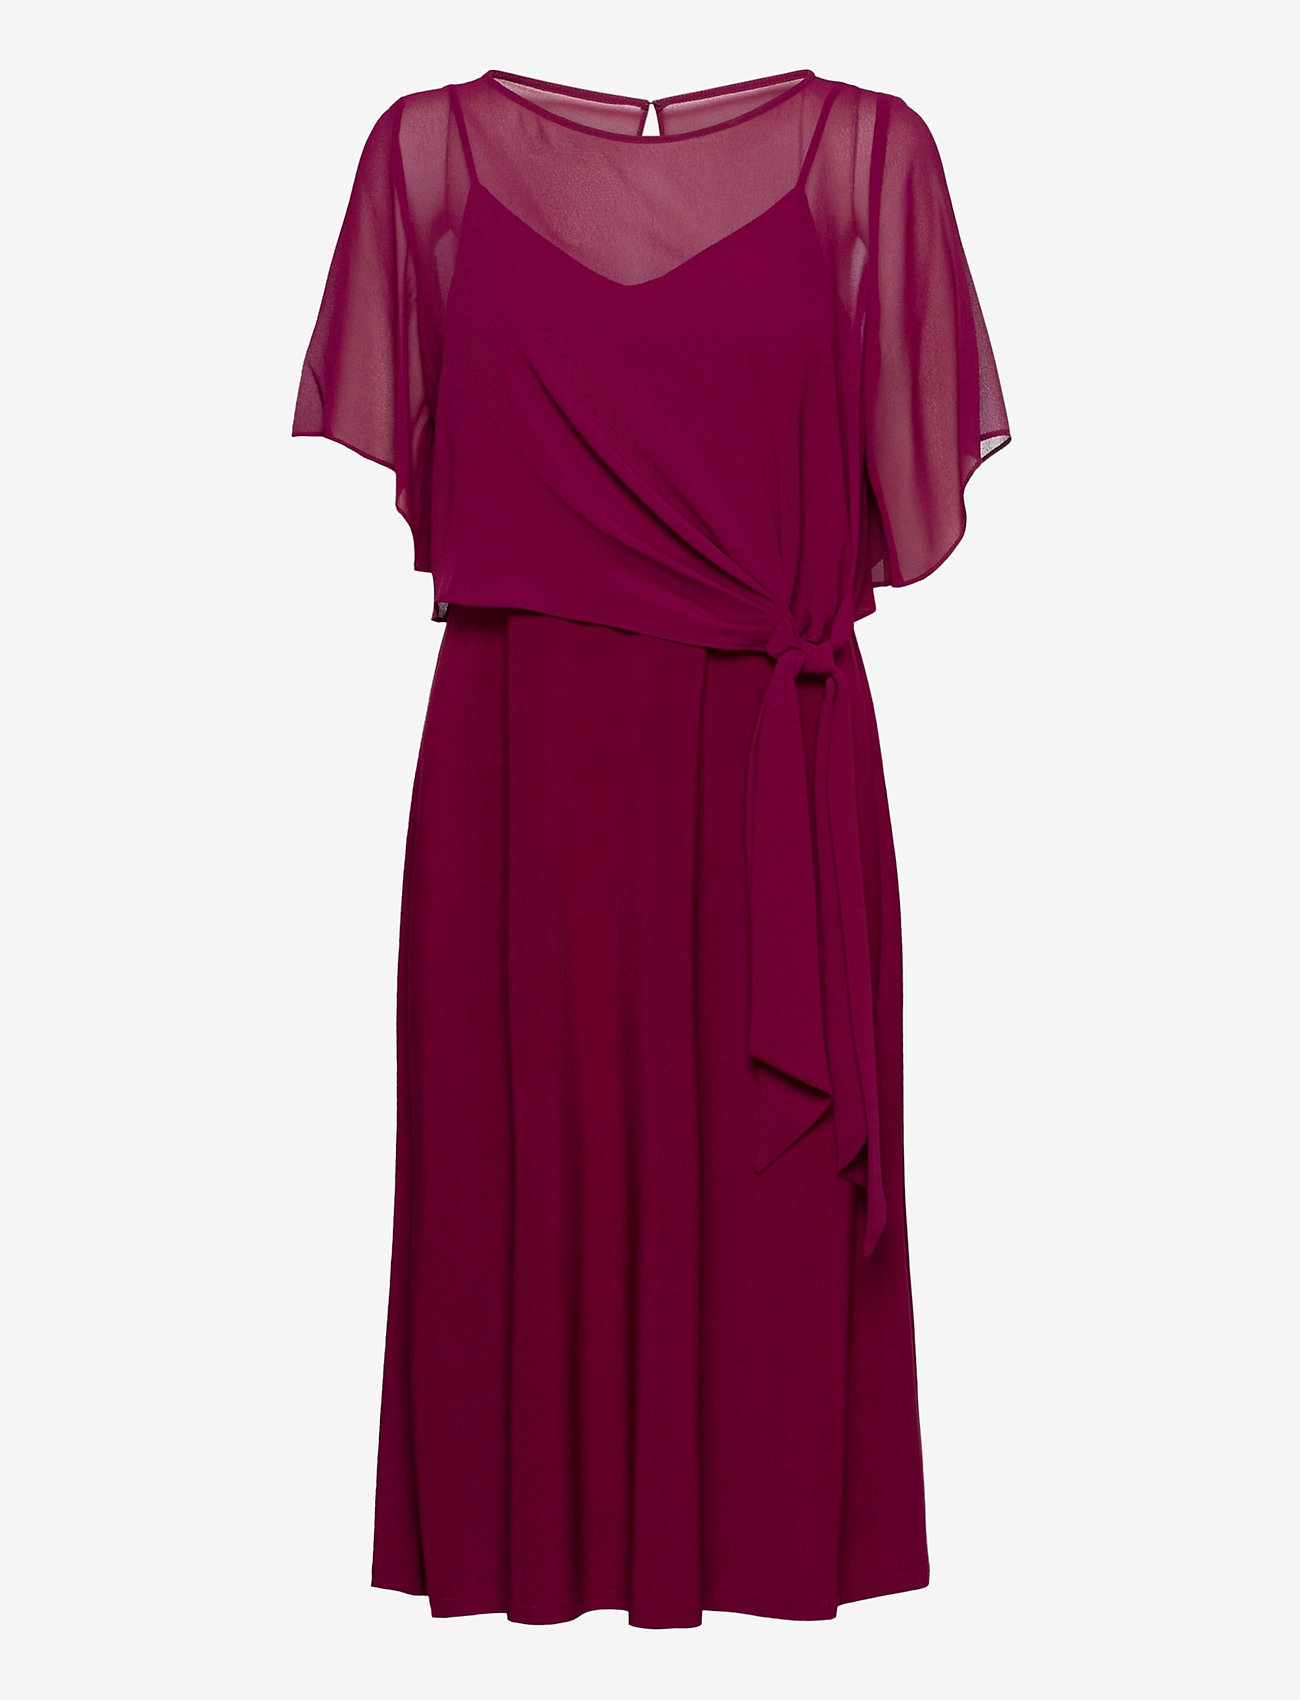 ralph lauren exotic ruby dress